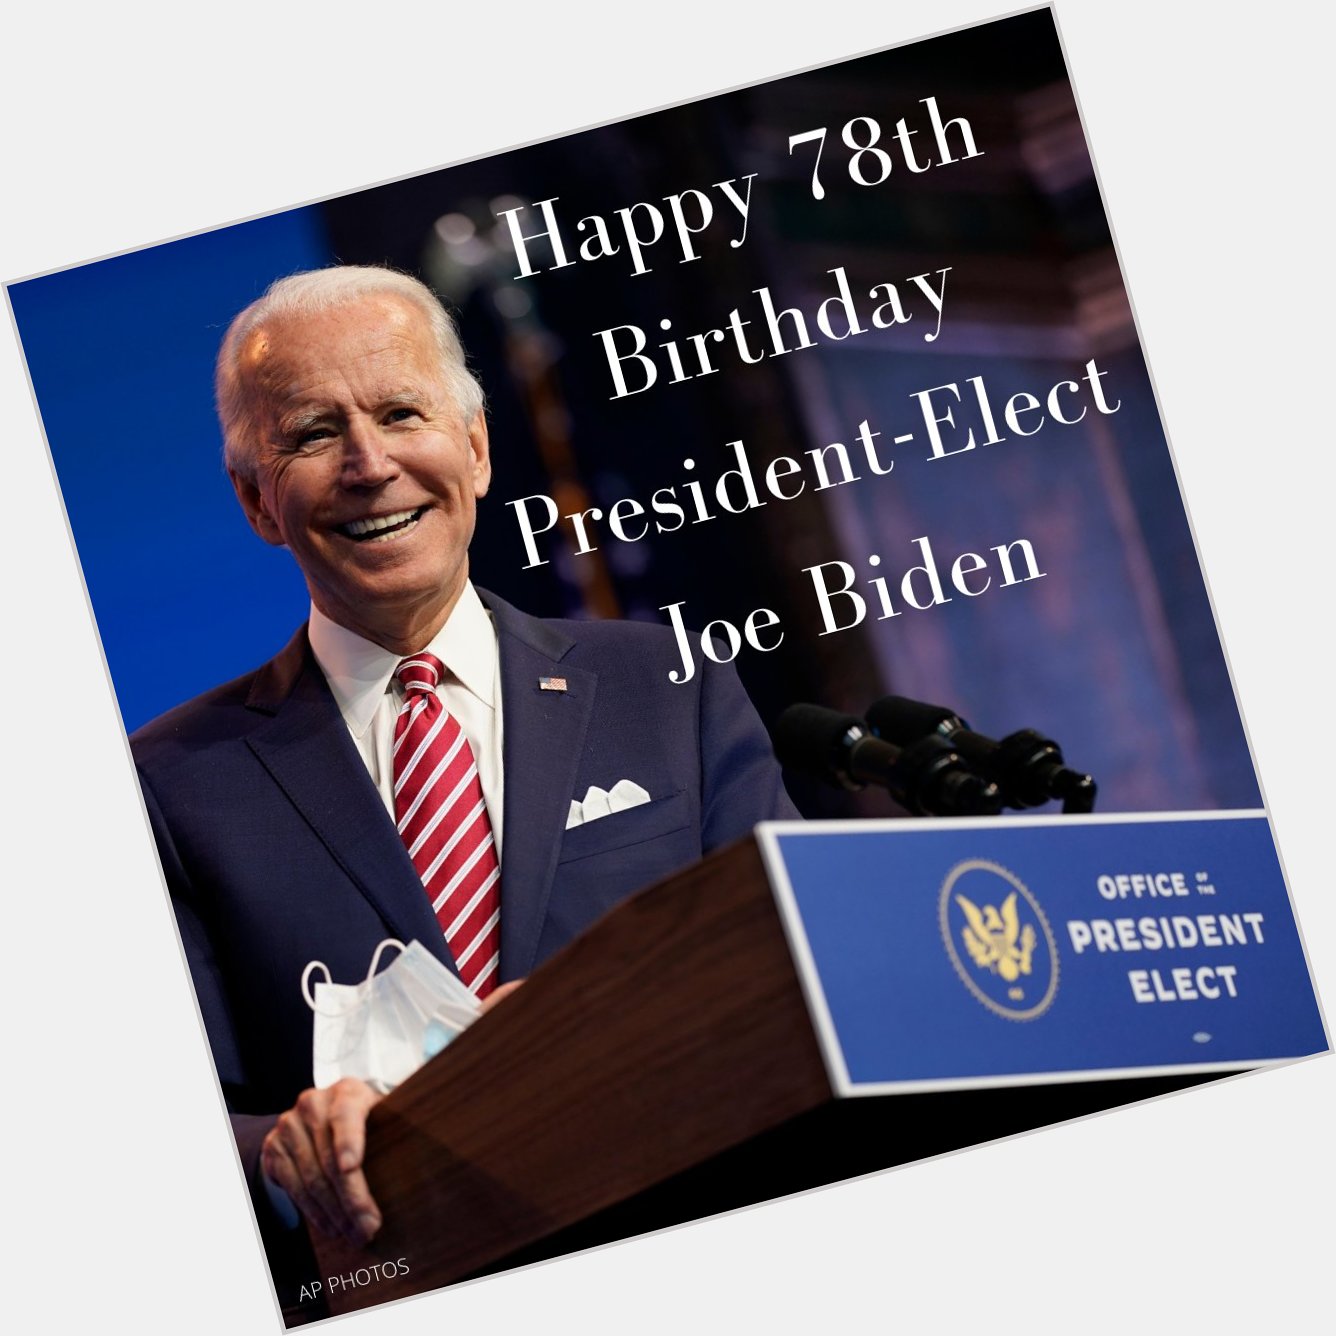 HAPPY BIRTHDAY! President-elect Joe Biden turns 78 today. 